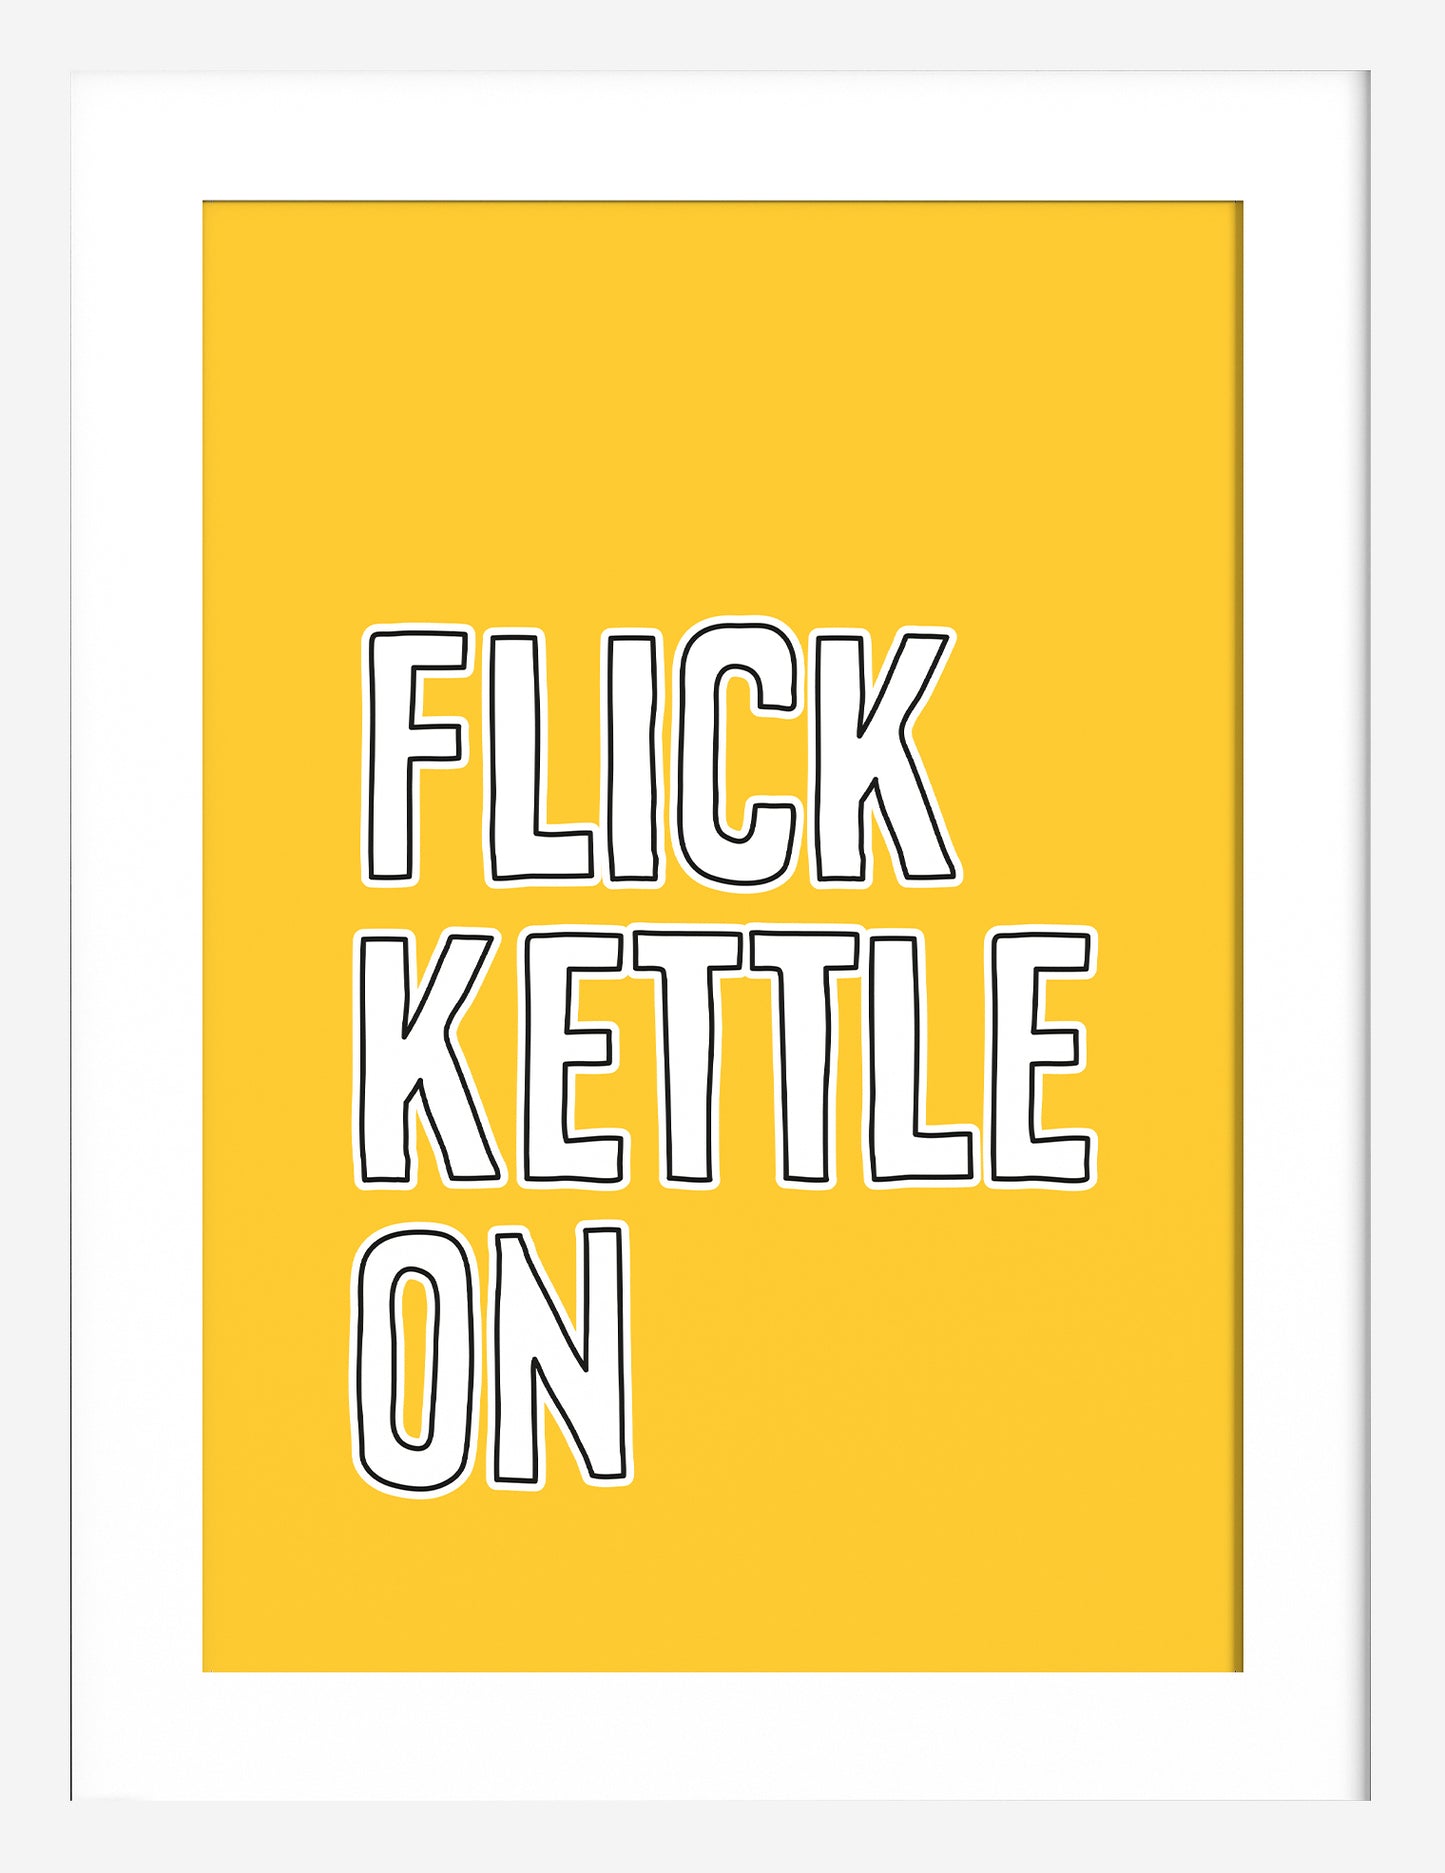 Flick Kettle On